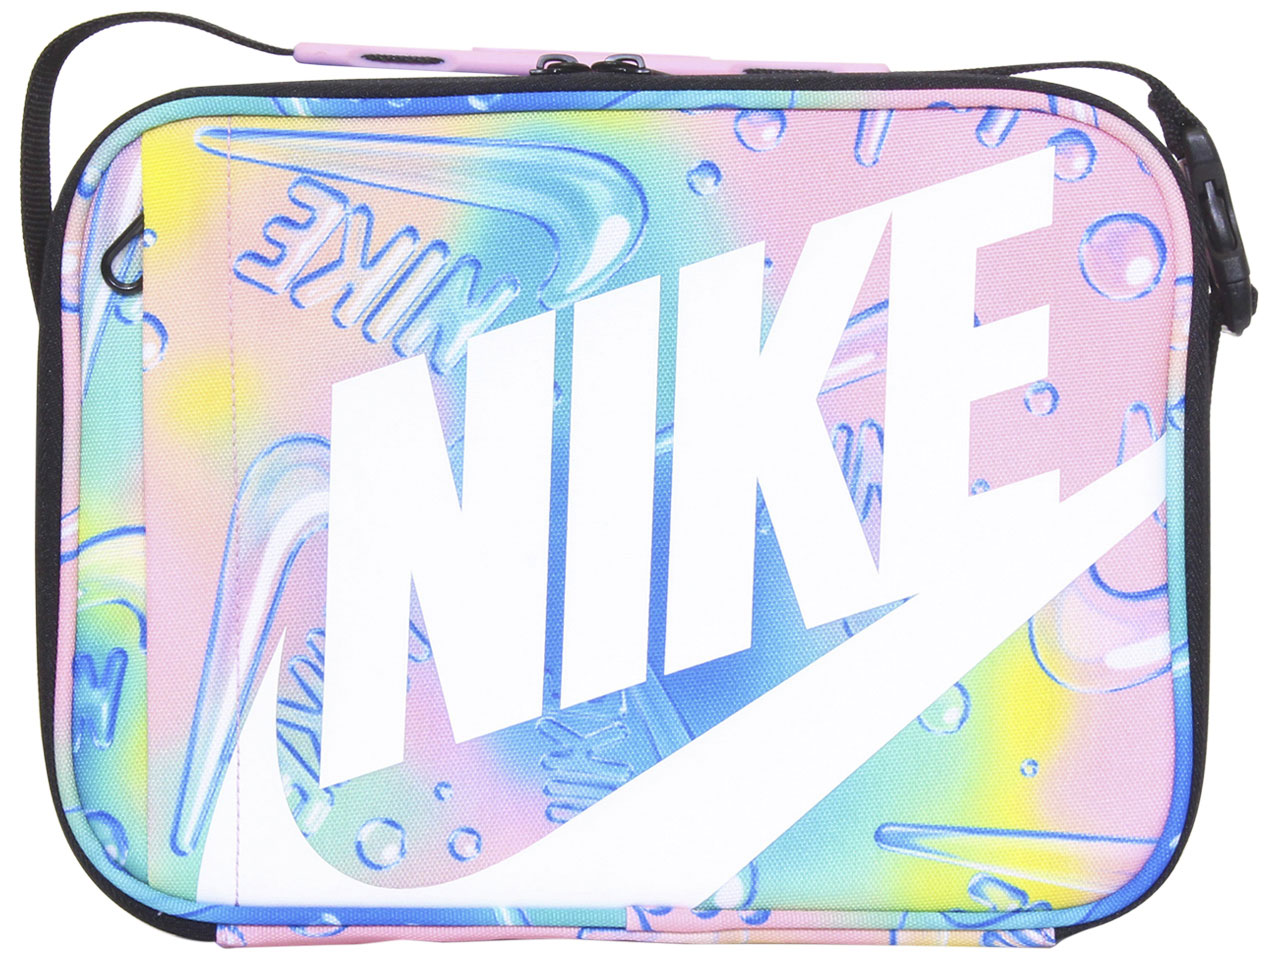 Shop Nike Kid's Logo Futura Lunch Bag